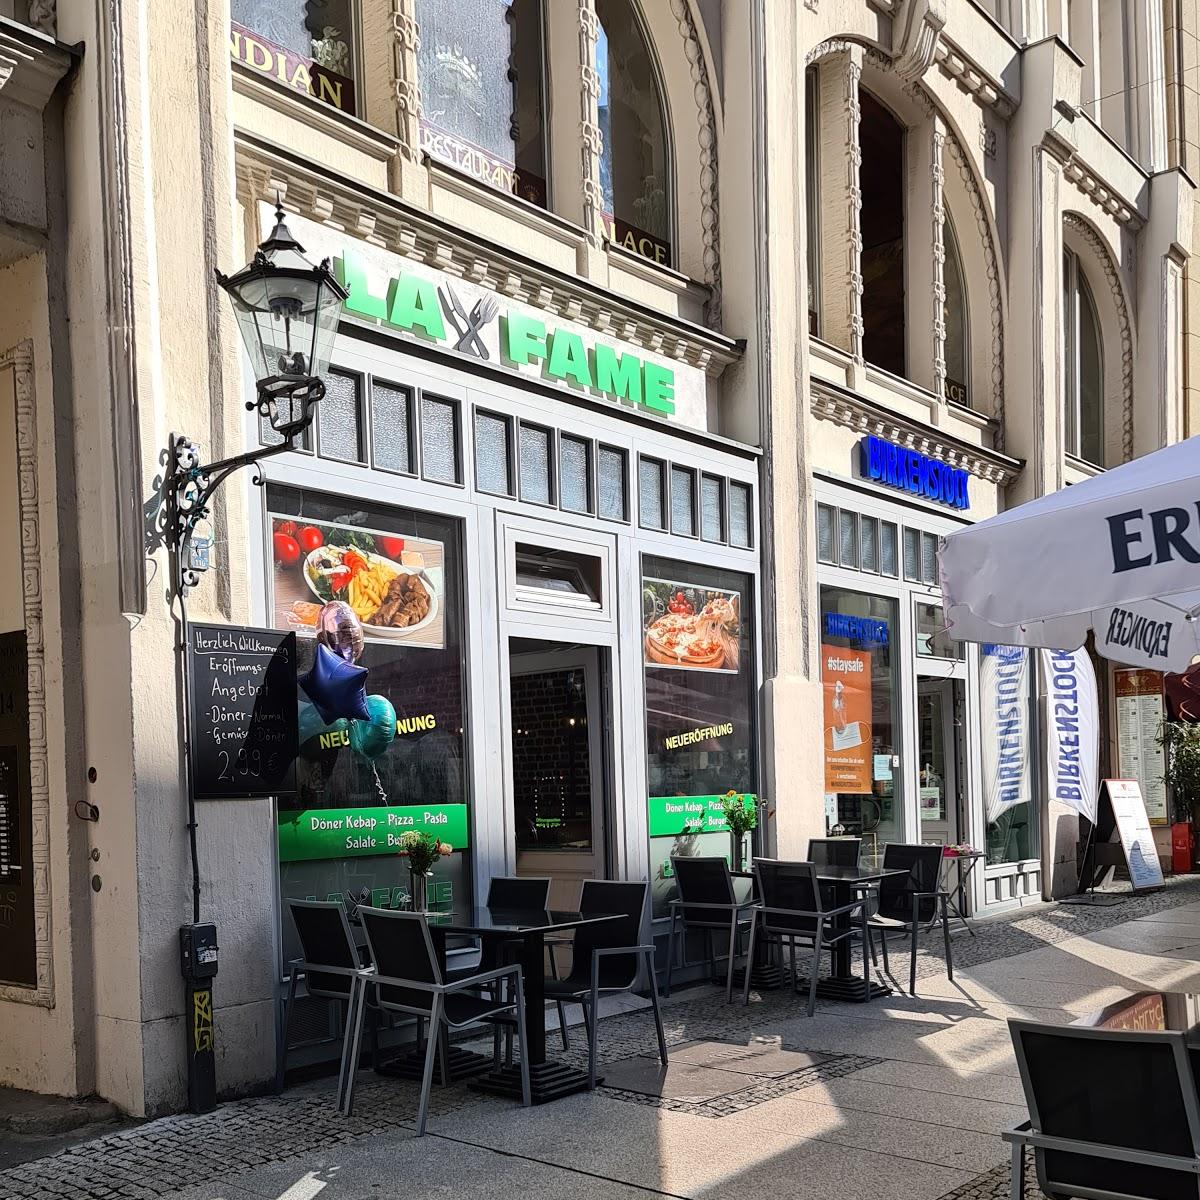 Restaurant "La Fame" in Leipzig